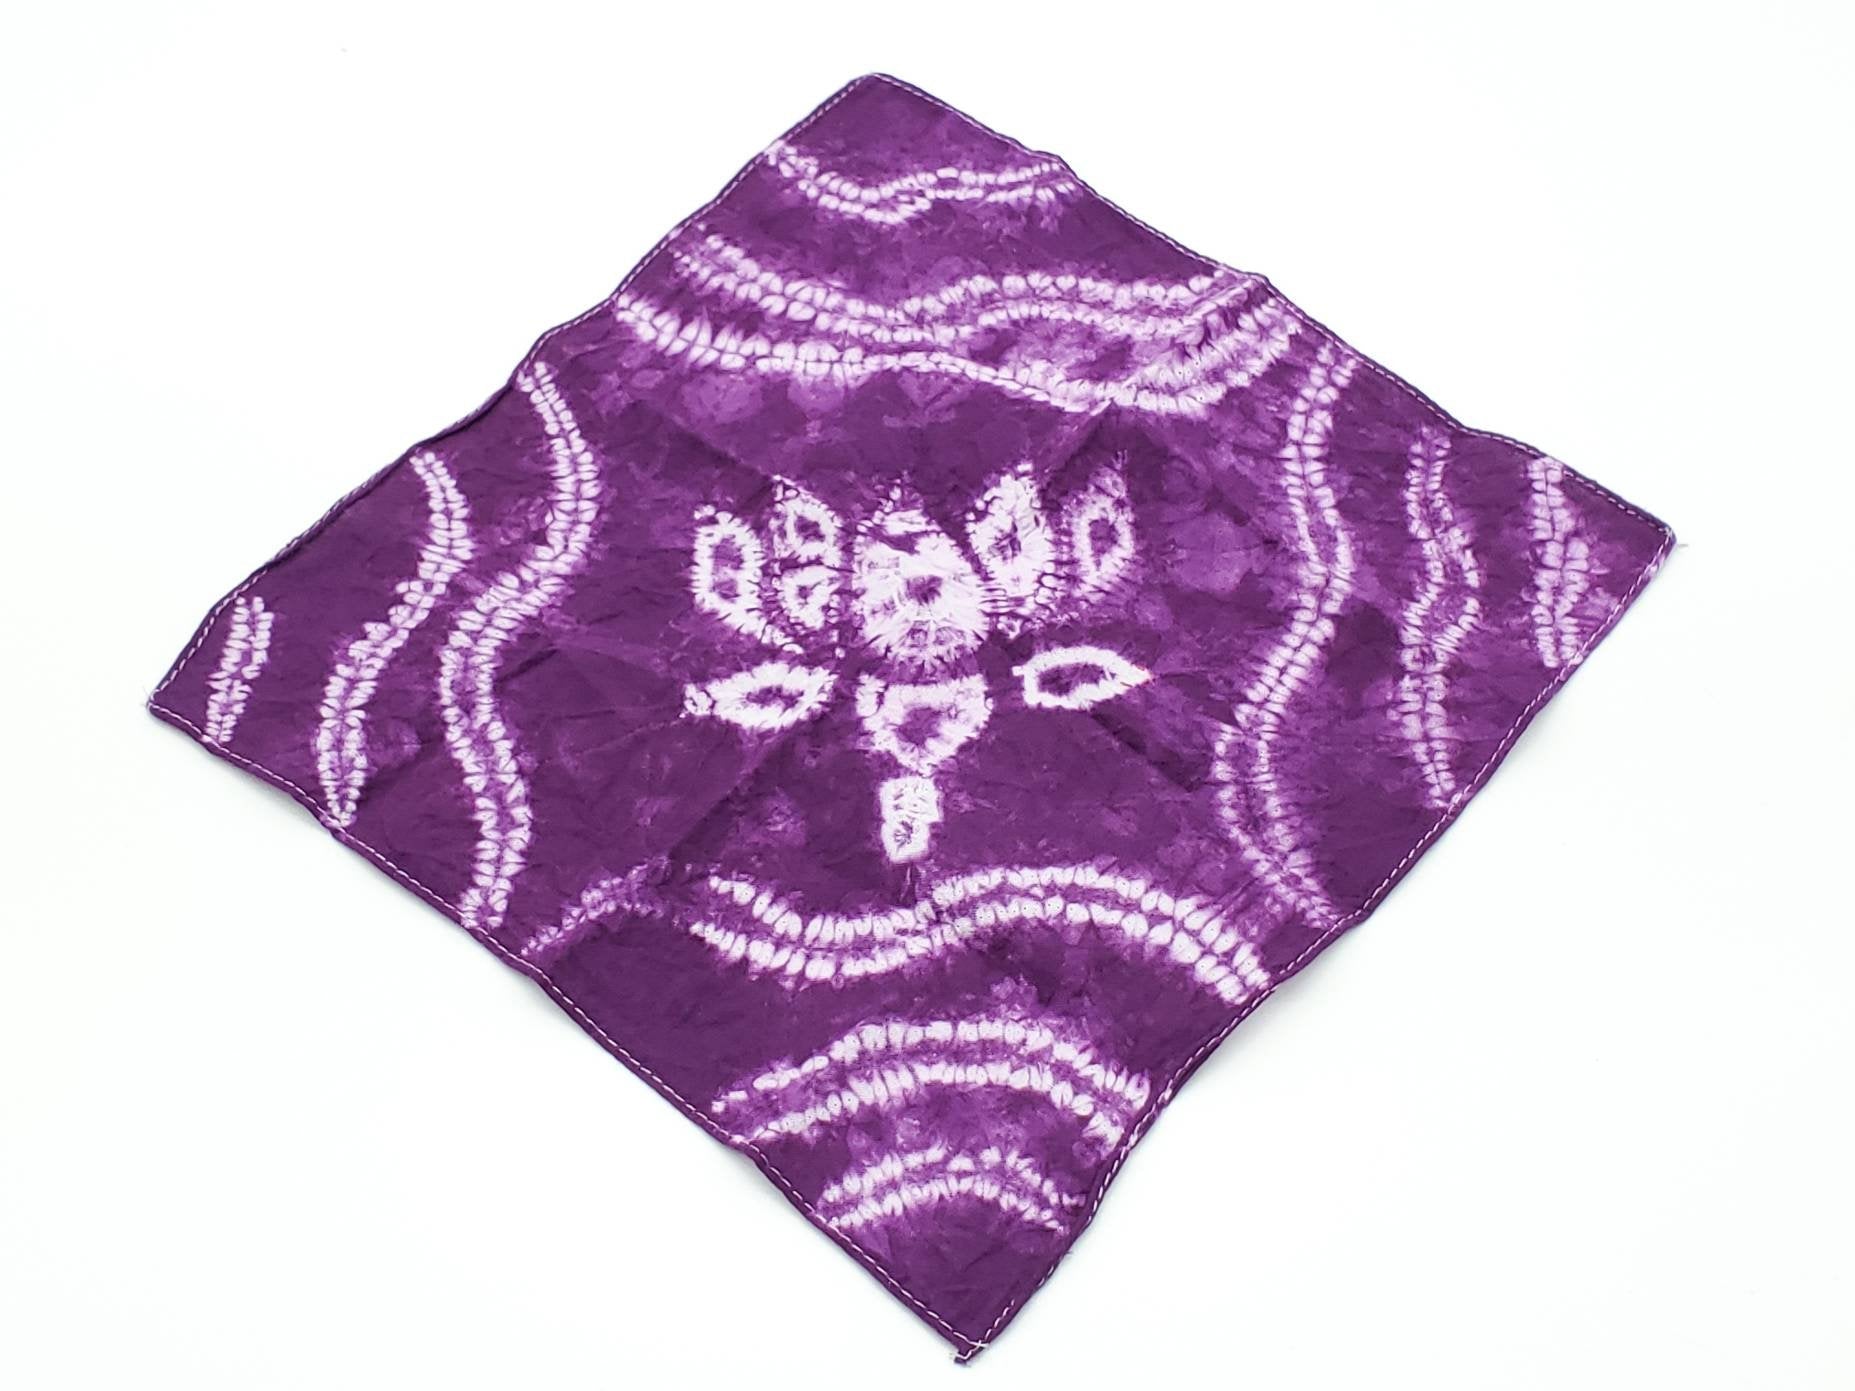 Nui Shibori Lotus Handkerchief or Pocket Square - The Caffeinated Raven